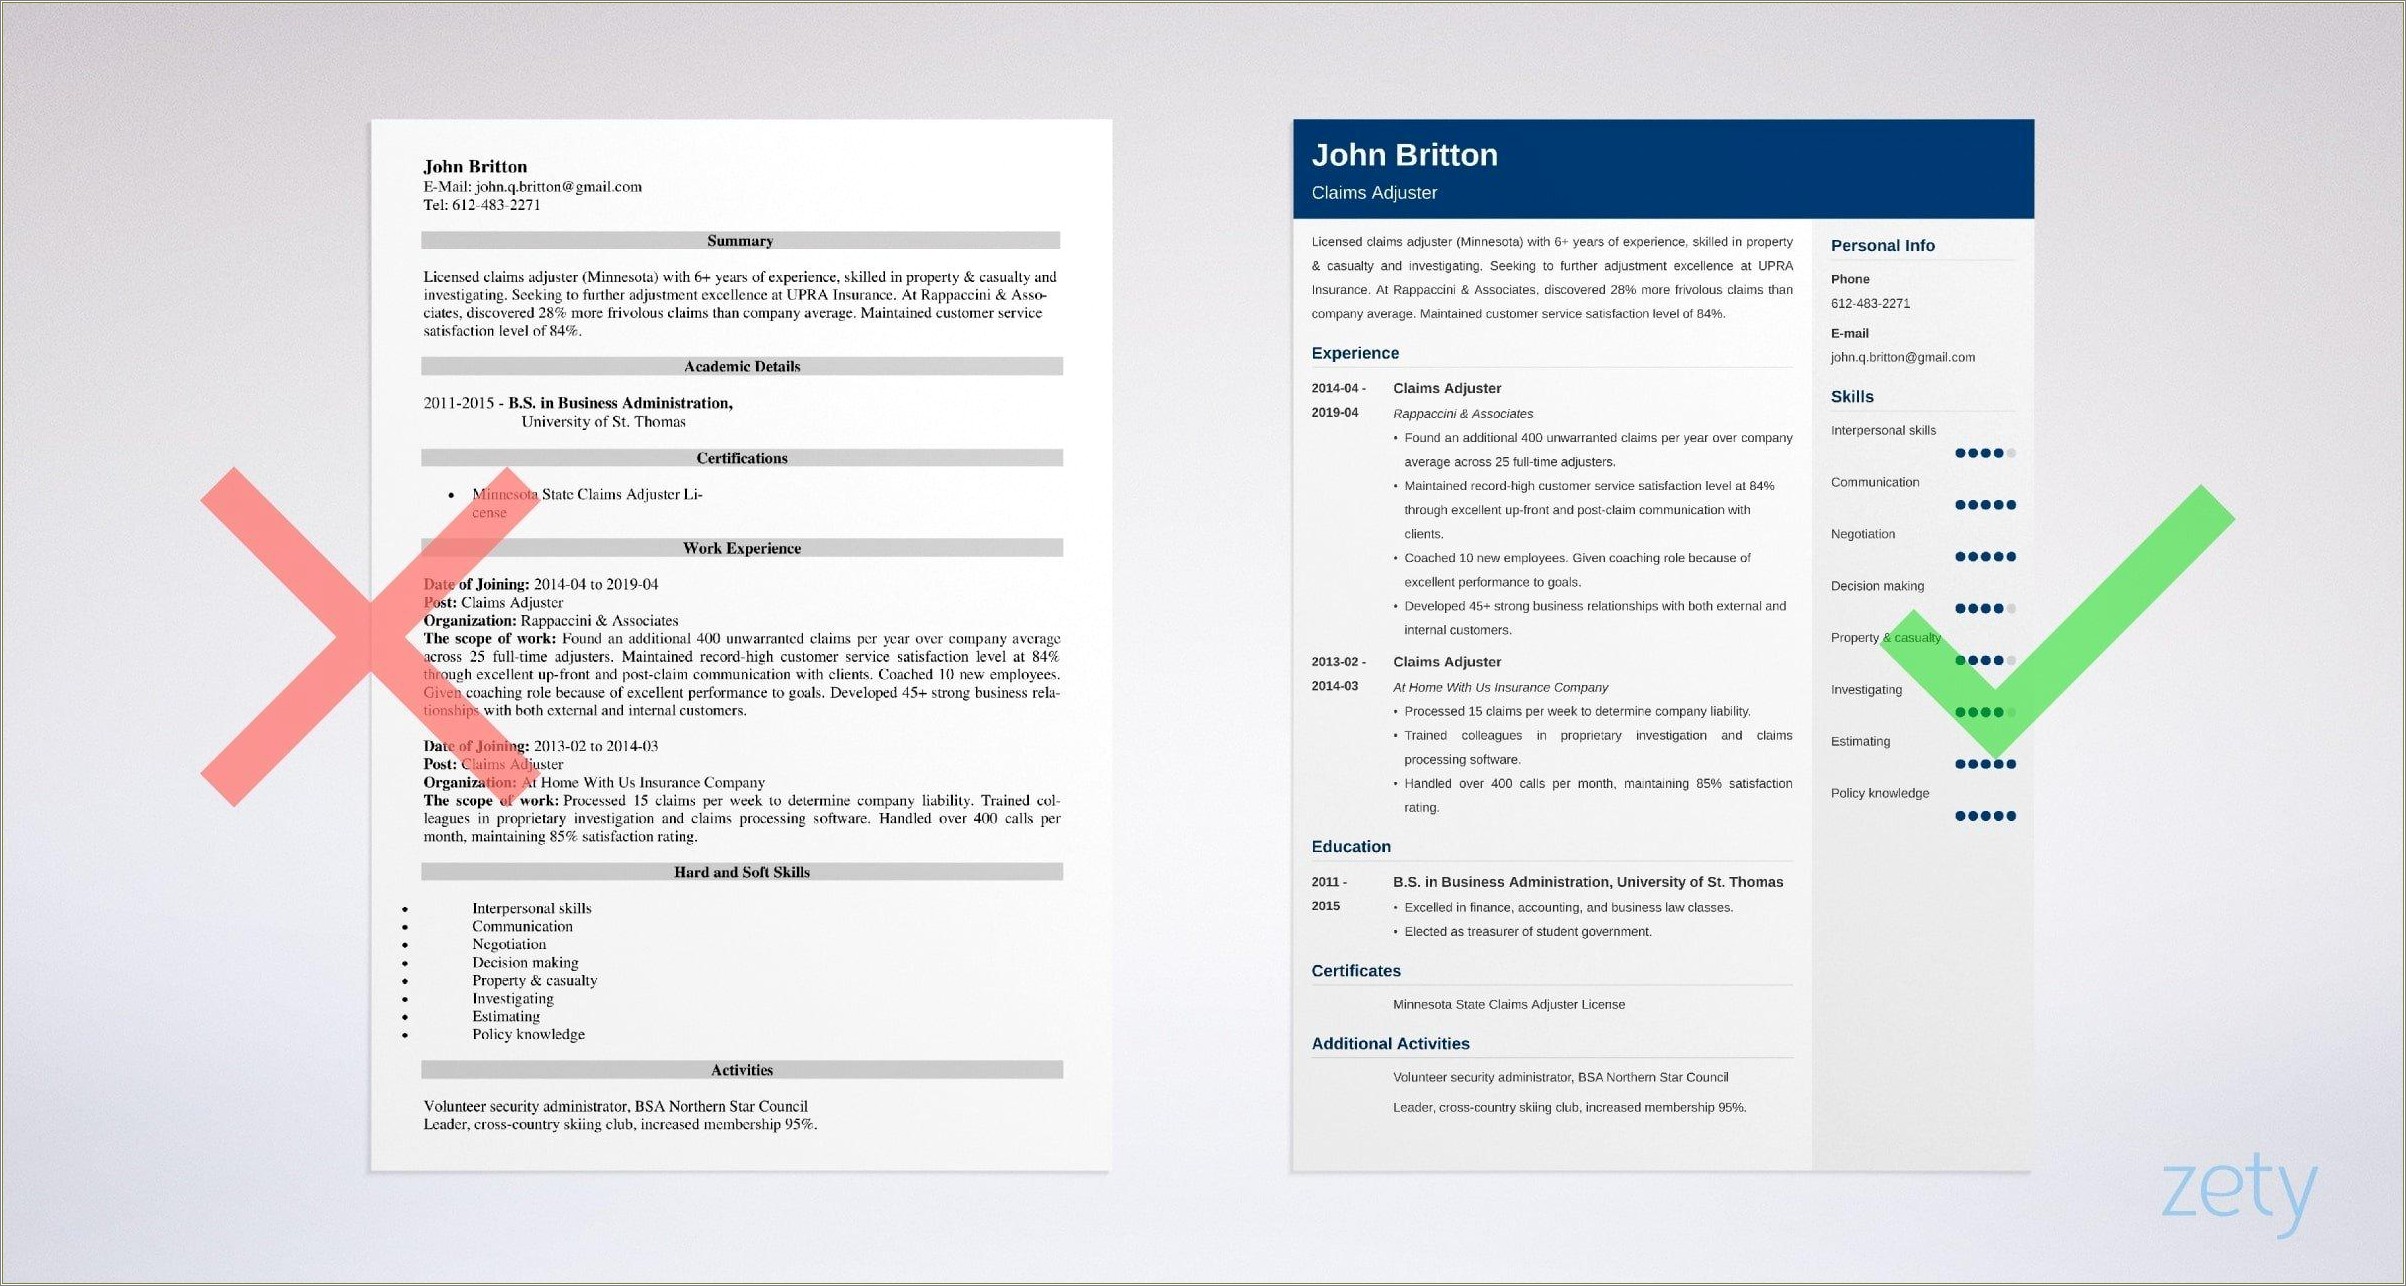 Property Claims Adjuster Job Description For Resume